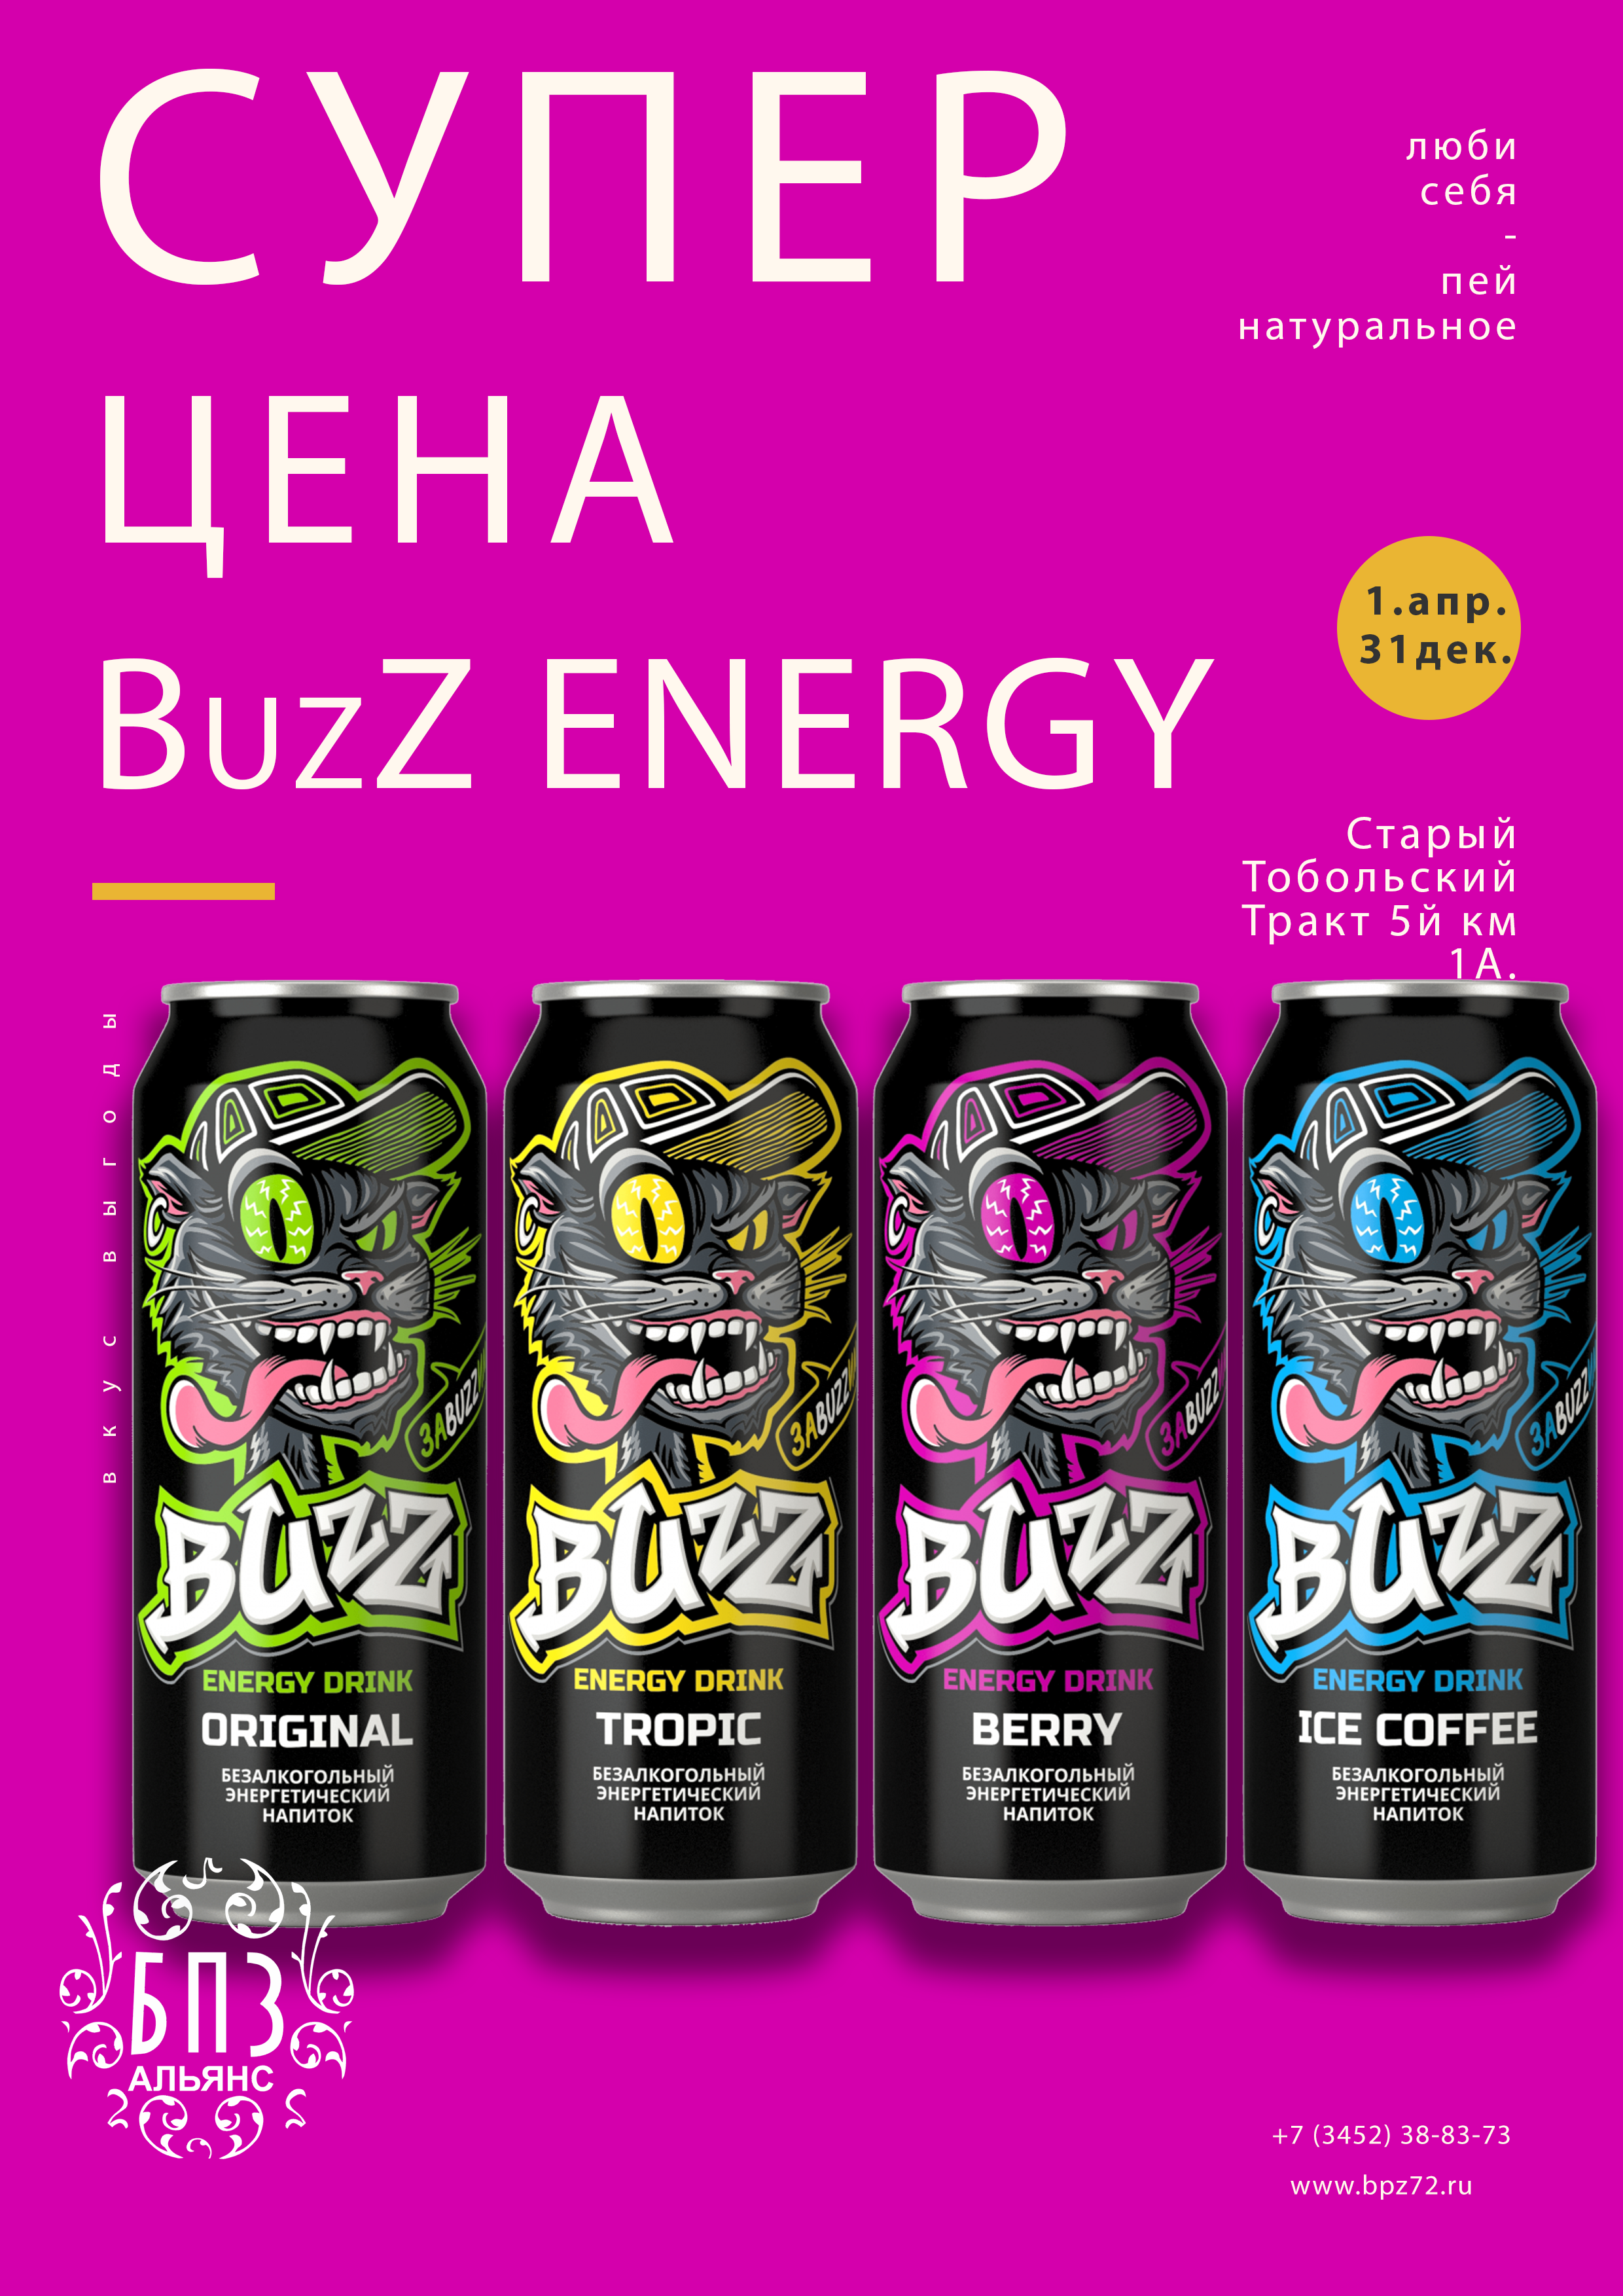 Промо баннер - акция на товар - энергетические напитки "Buzz". Ссылка на страницу акции.